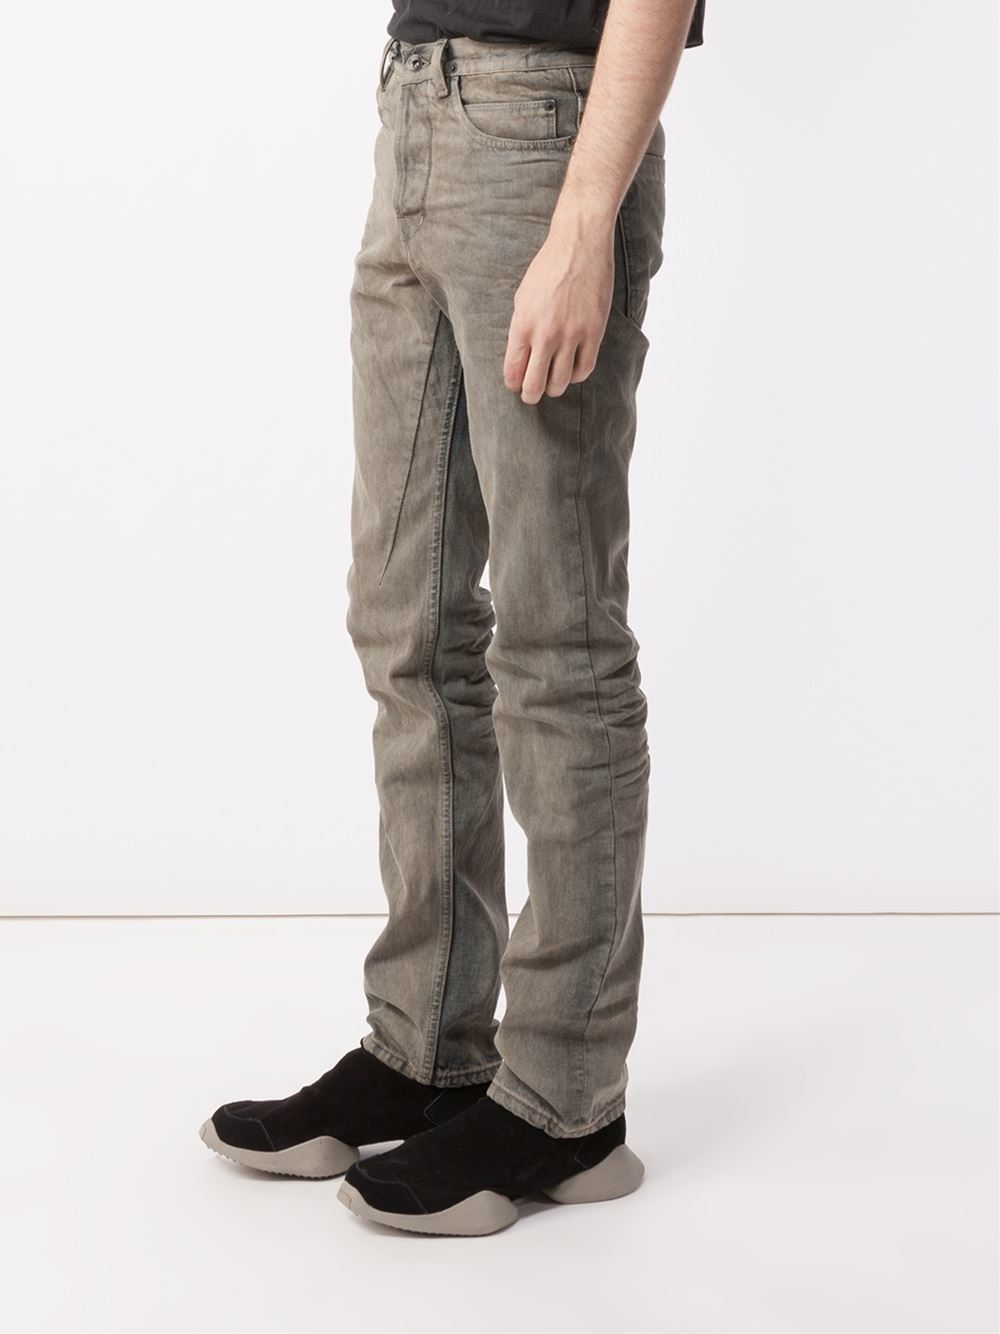 Rick Owens DRKSHDW Denim Straight Leg Jeans in Grey (Gray) for Men - Lyst